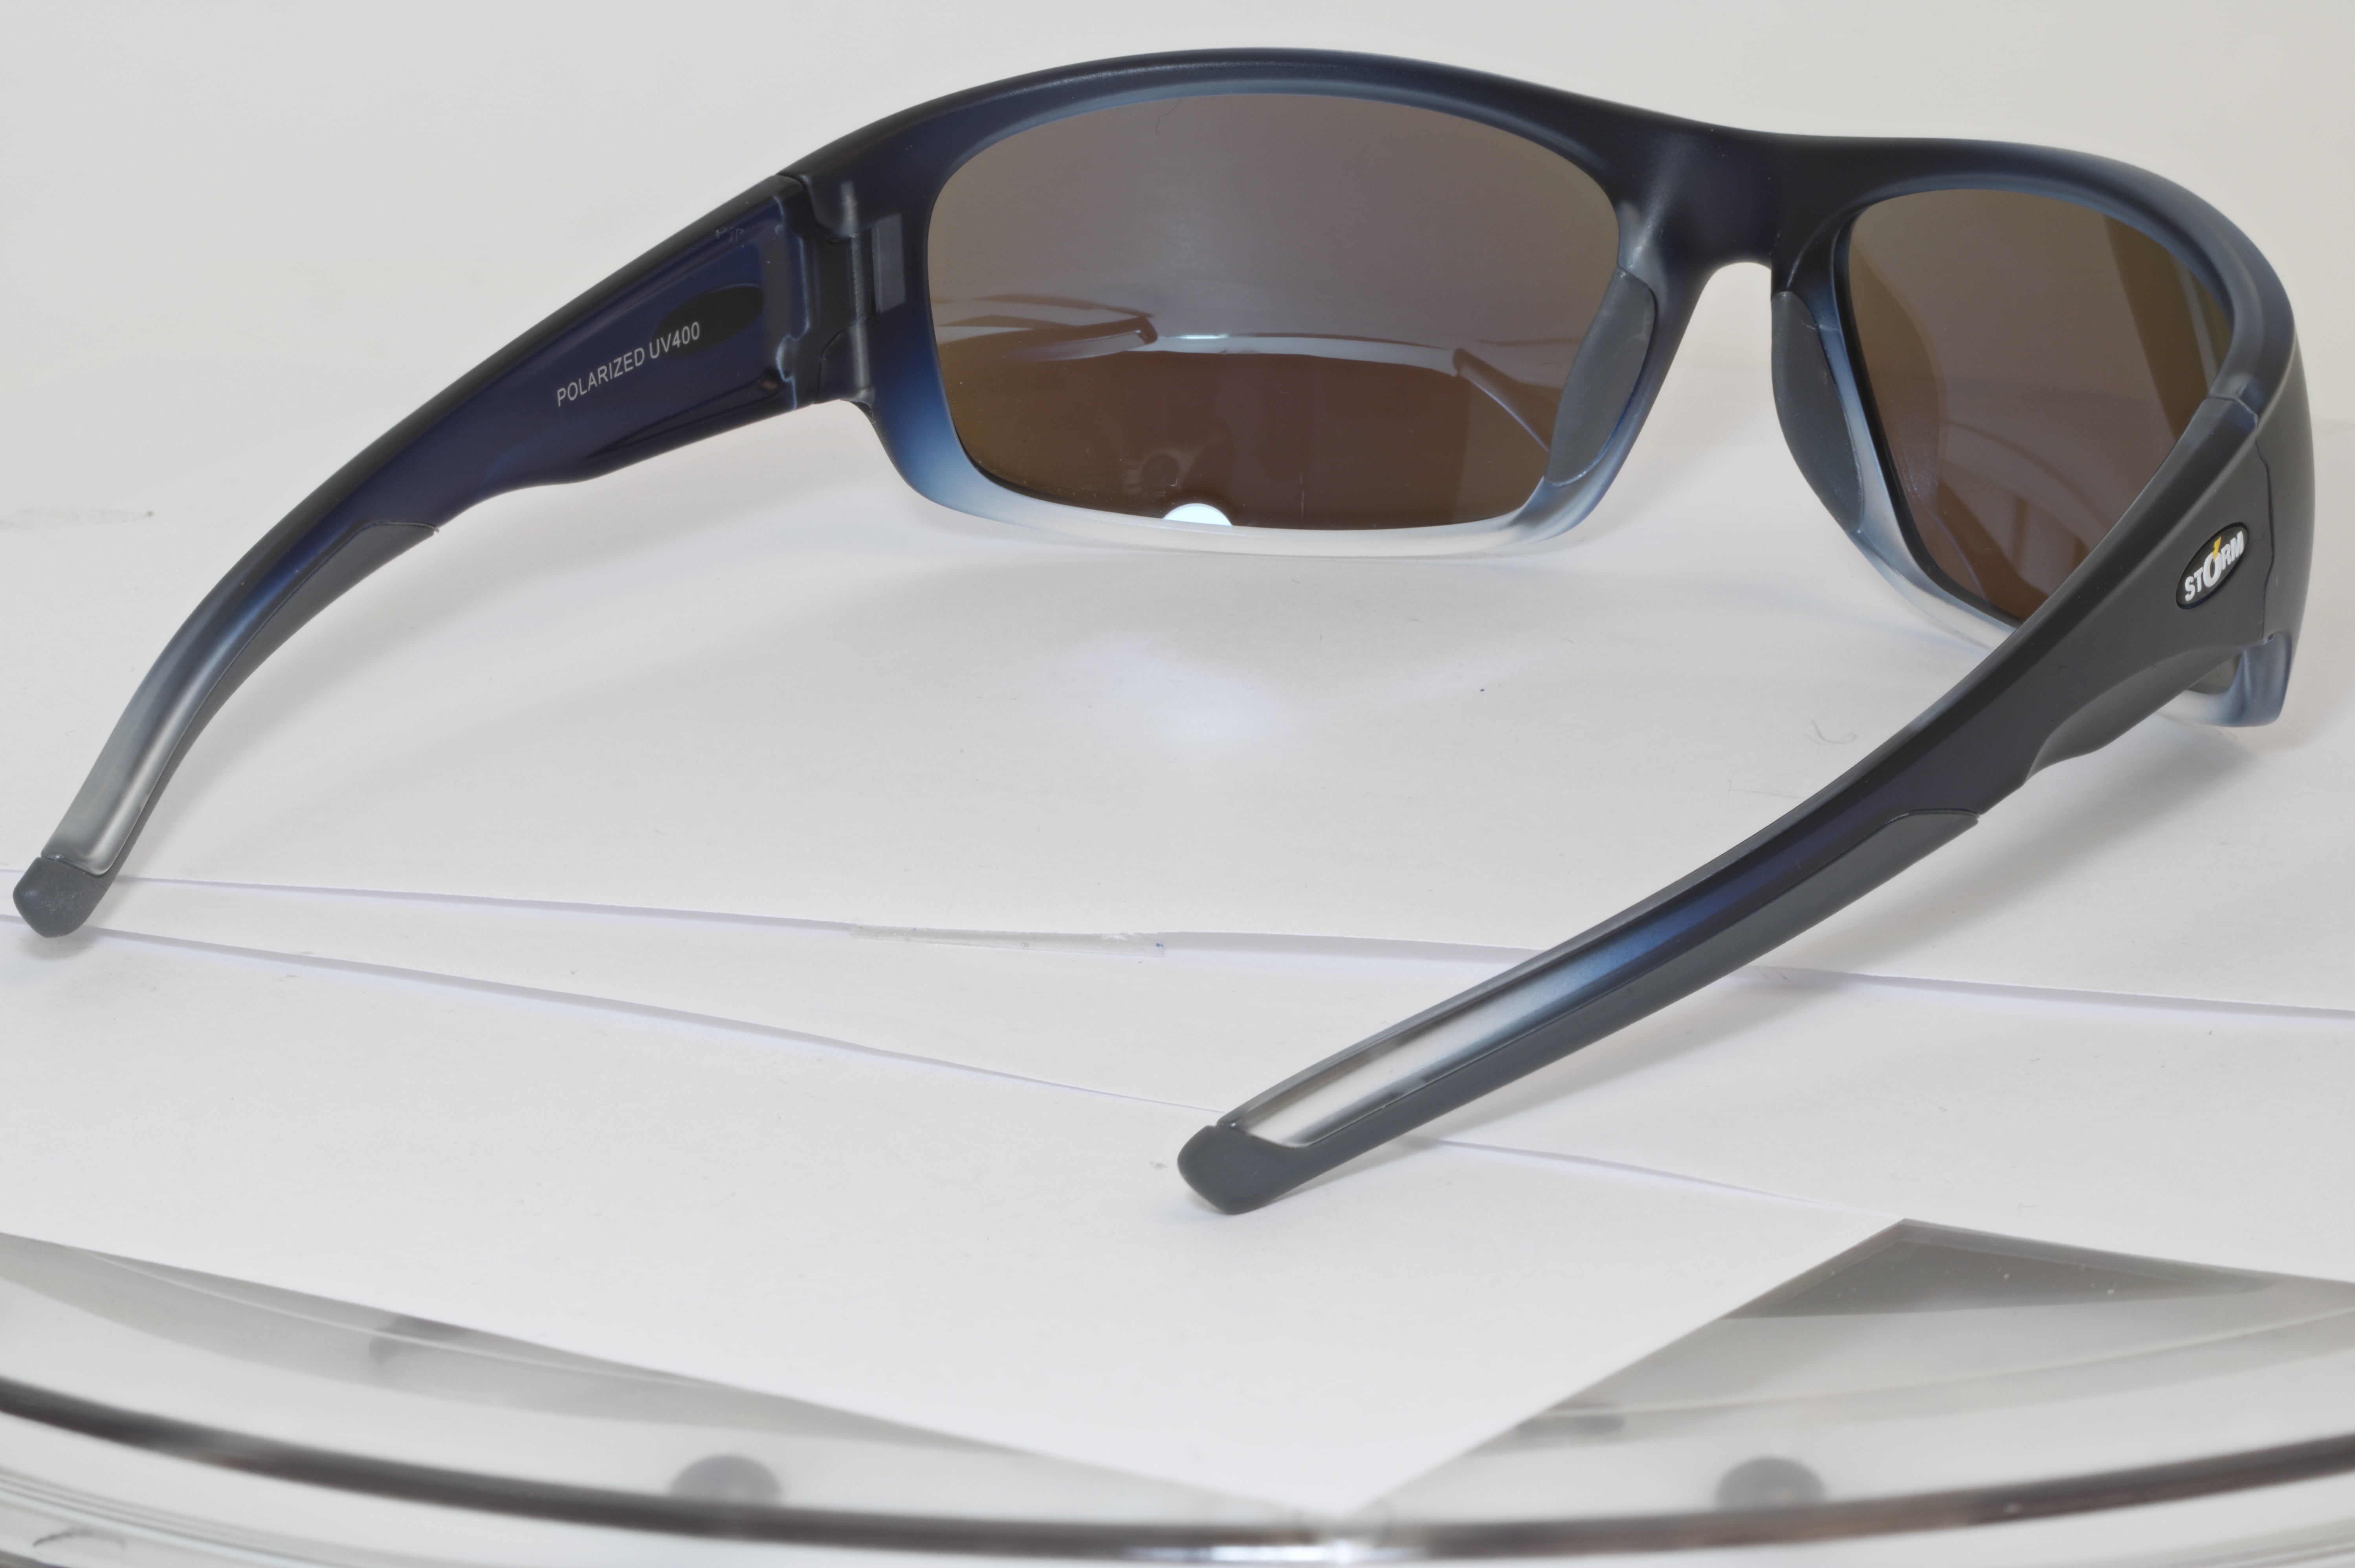 Storm Polarized Full Frame Fishing Sunglasses, STF-690046